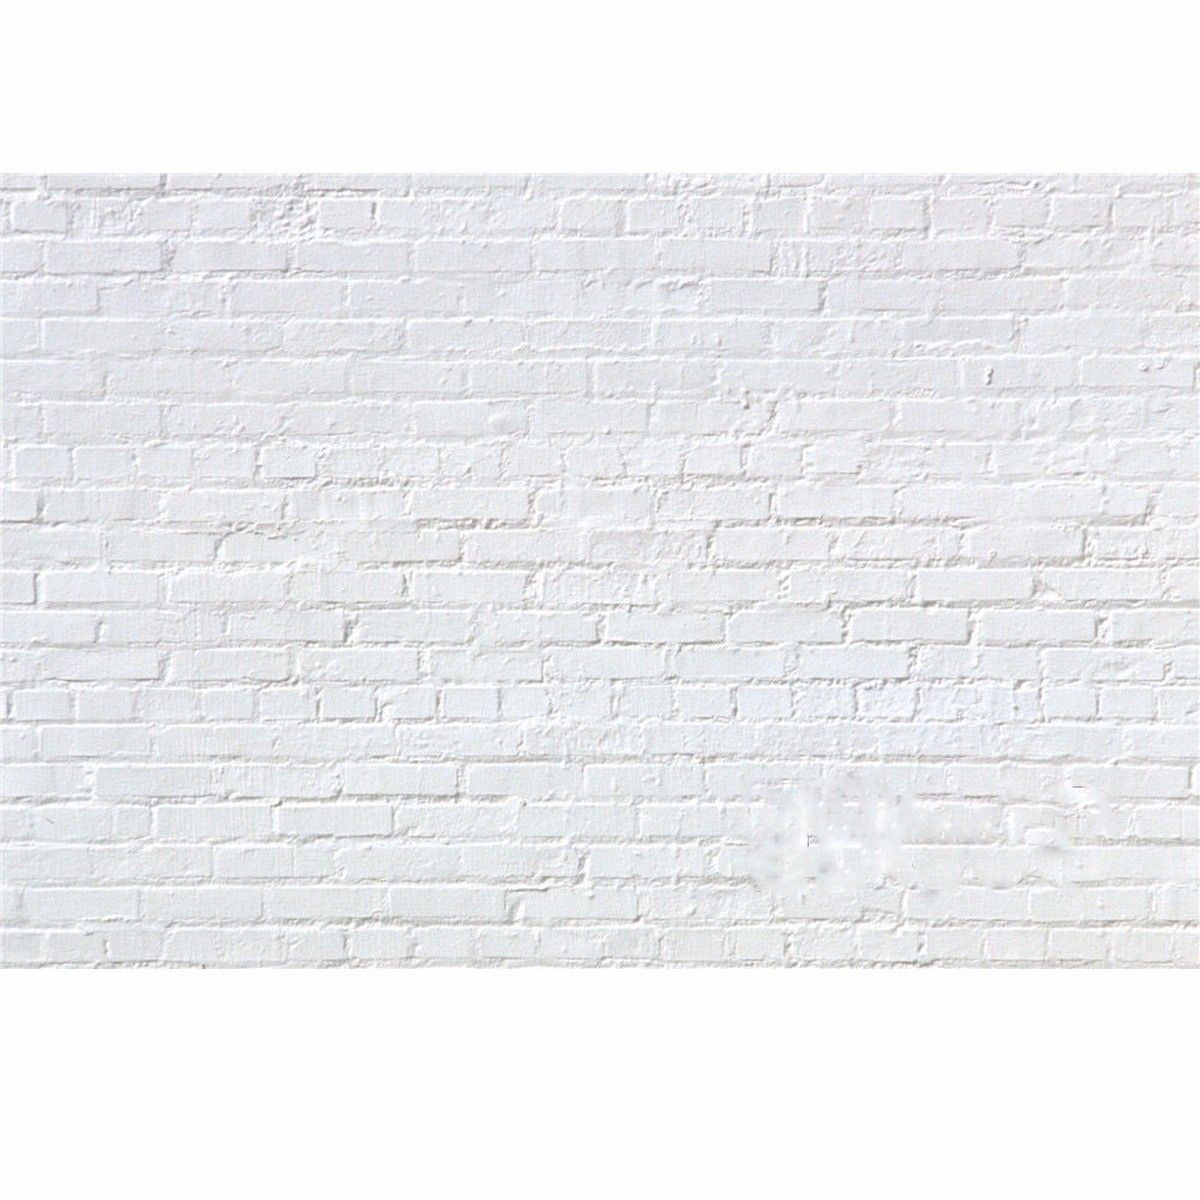 7x5FT-Vinyl-White-Brick-Wall-Photography-Background-Backdrop-Studio-Photo-Props-1162160